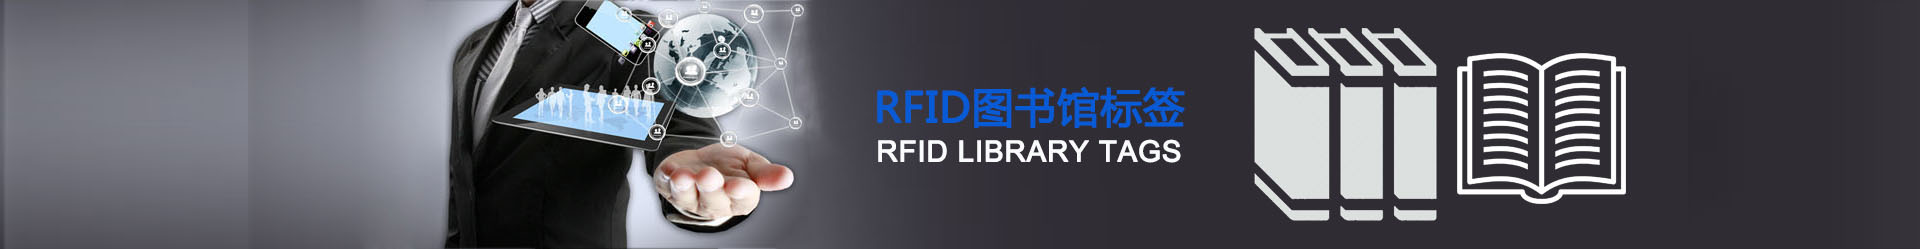 rfid书架标签